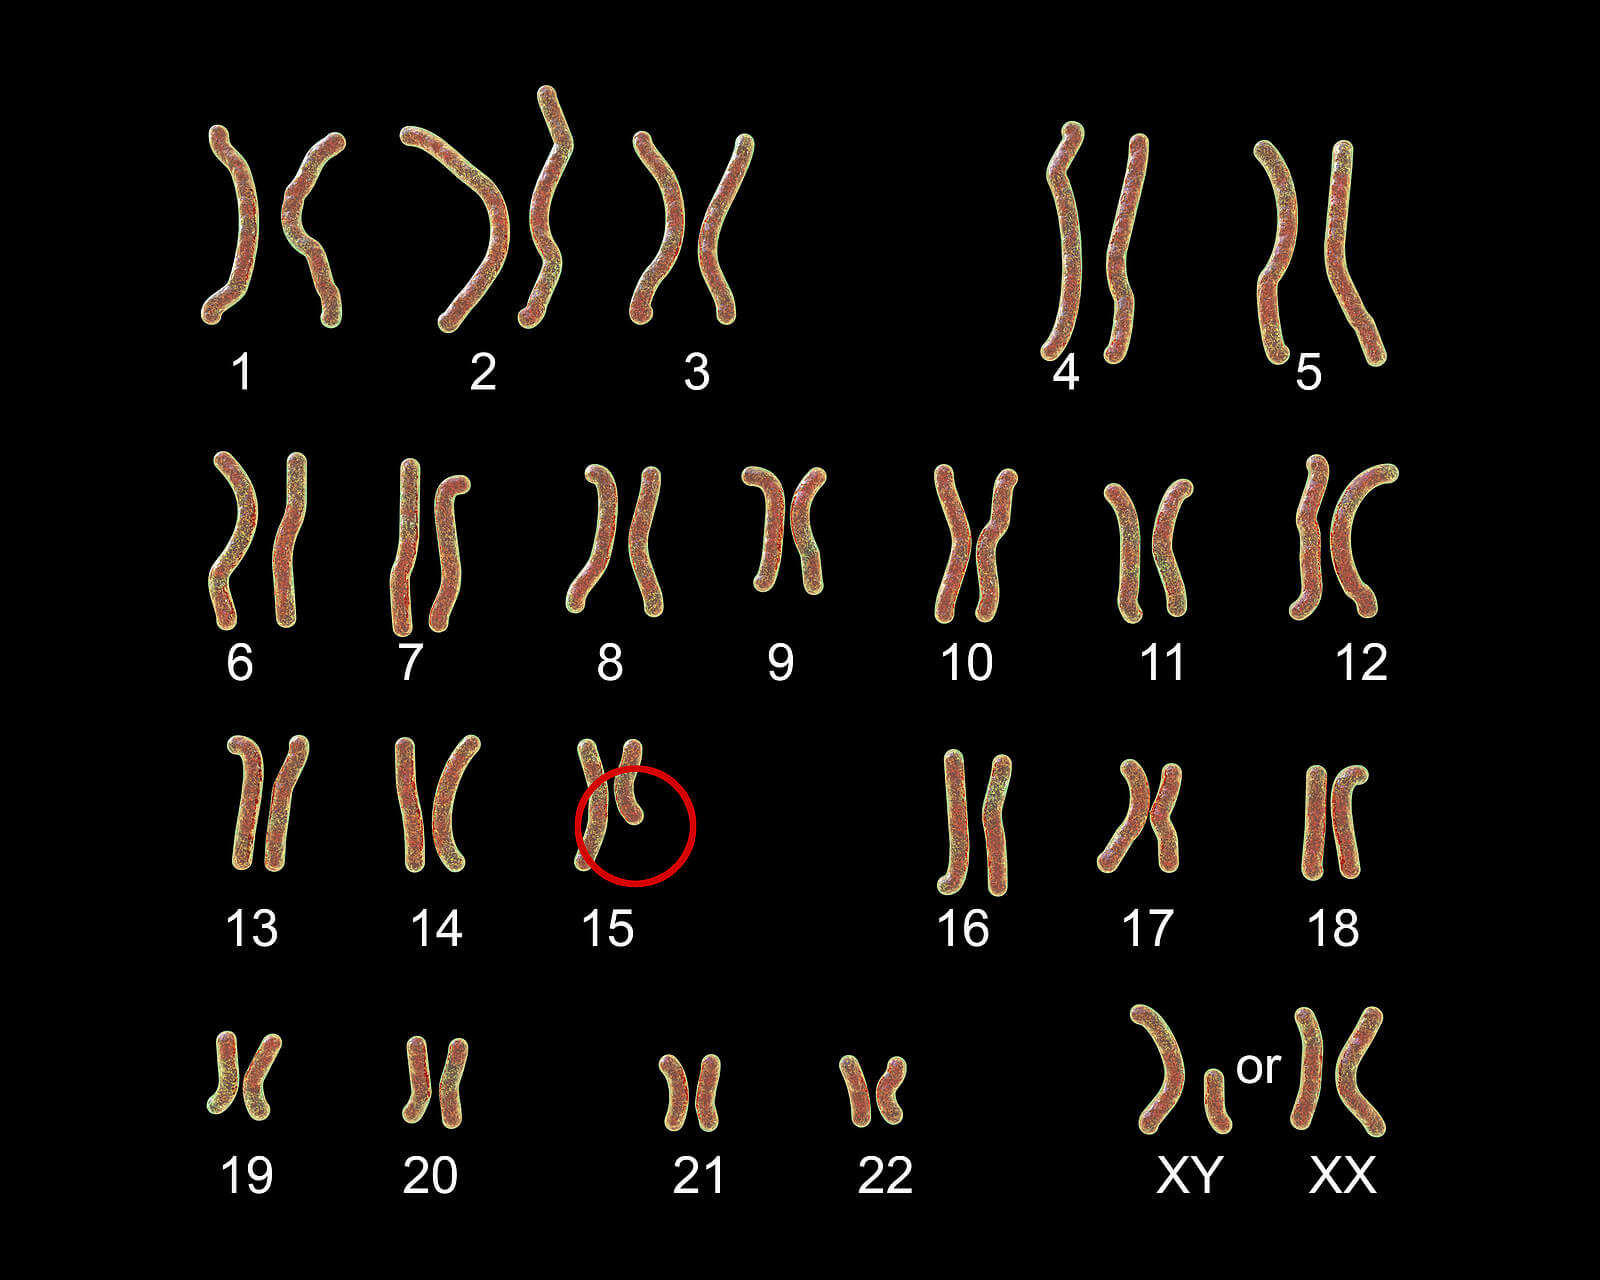 Cromosomas síndrome Prader Willi.